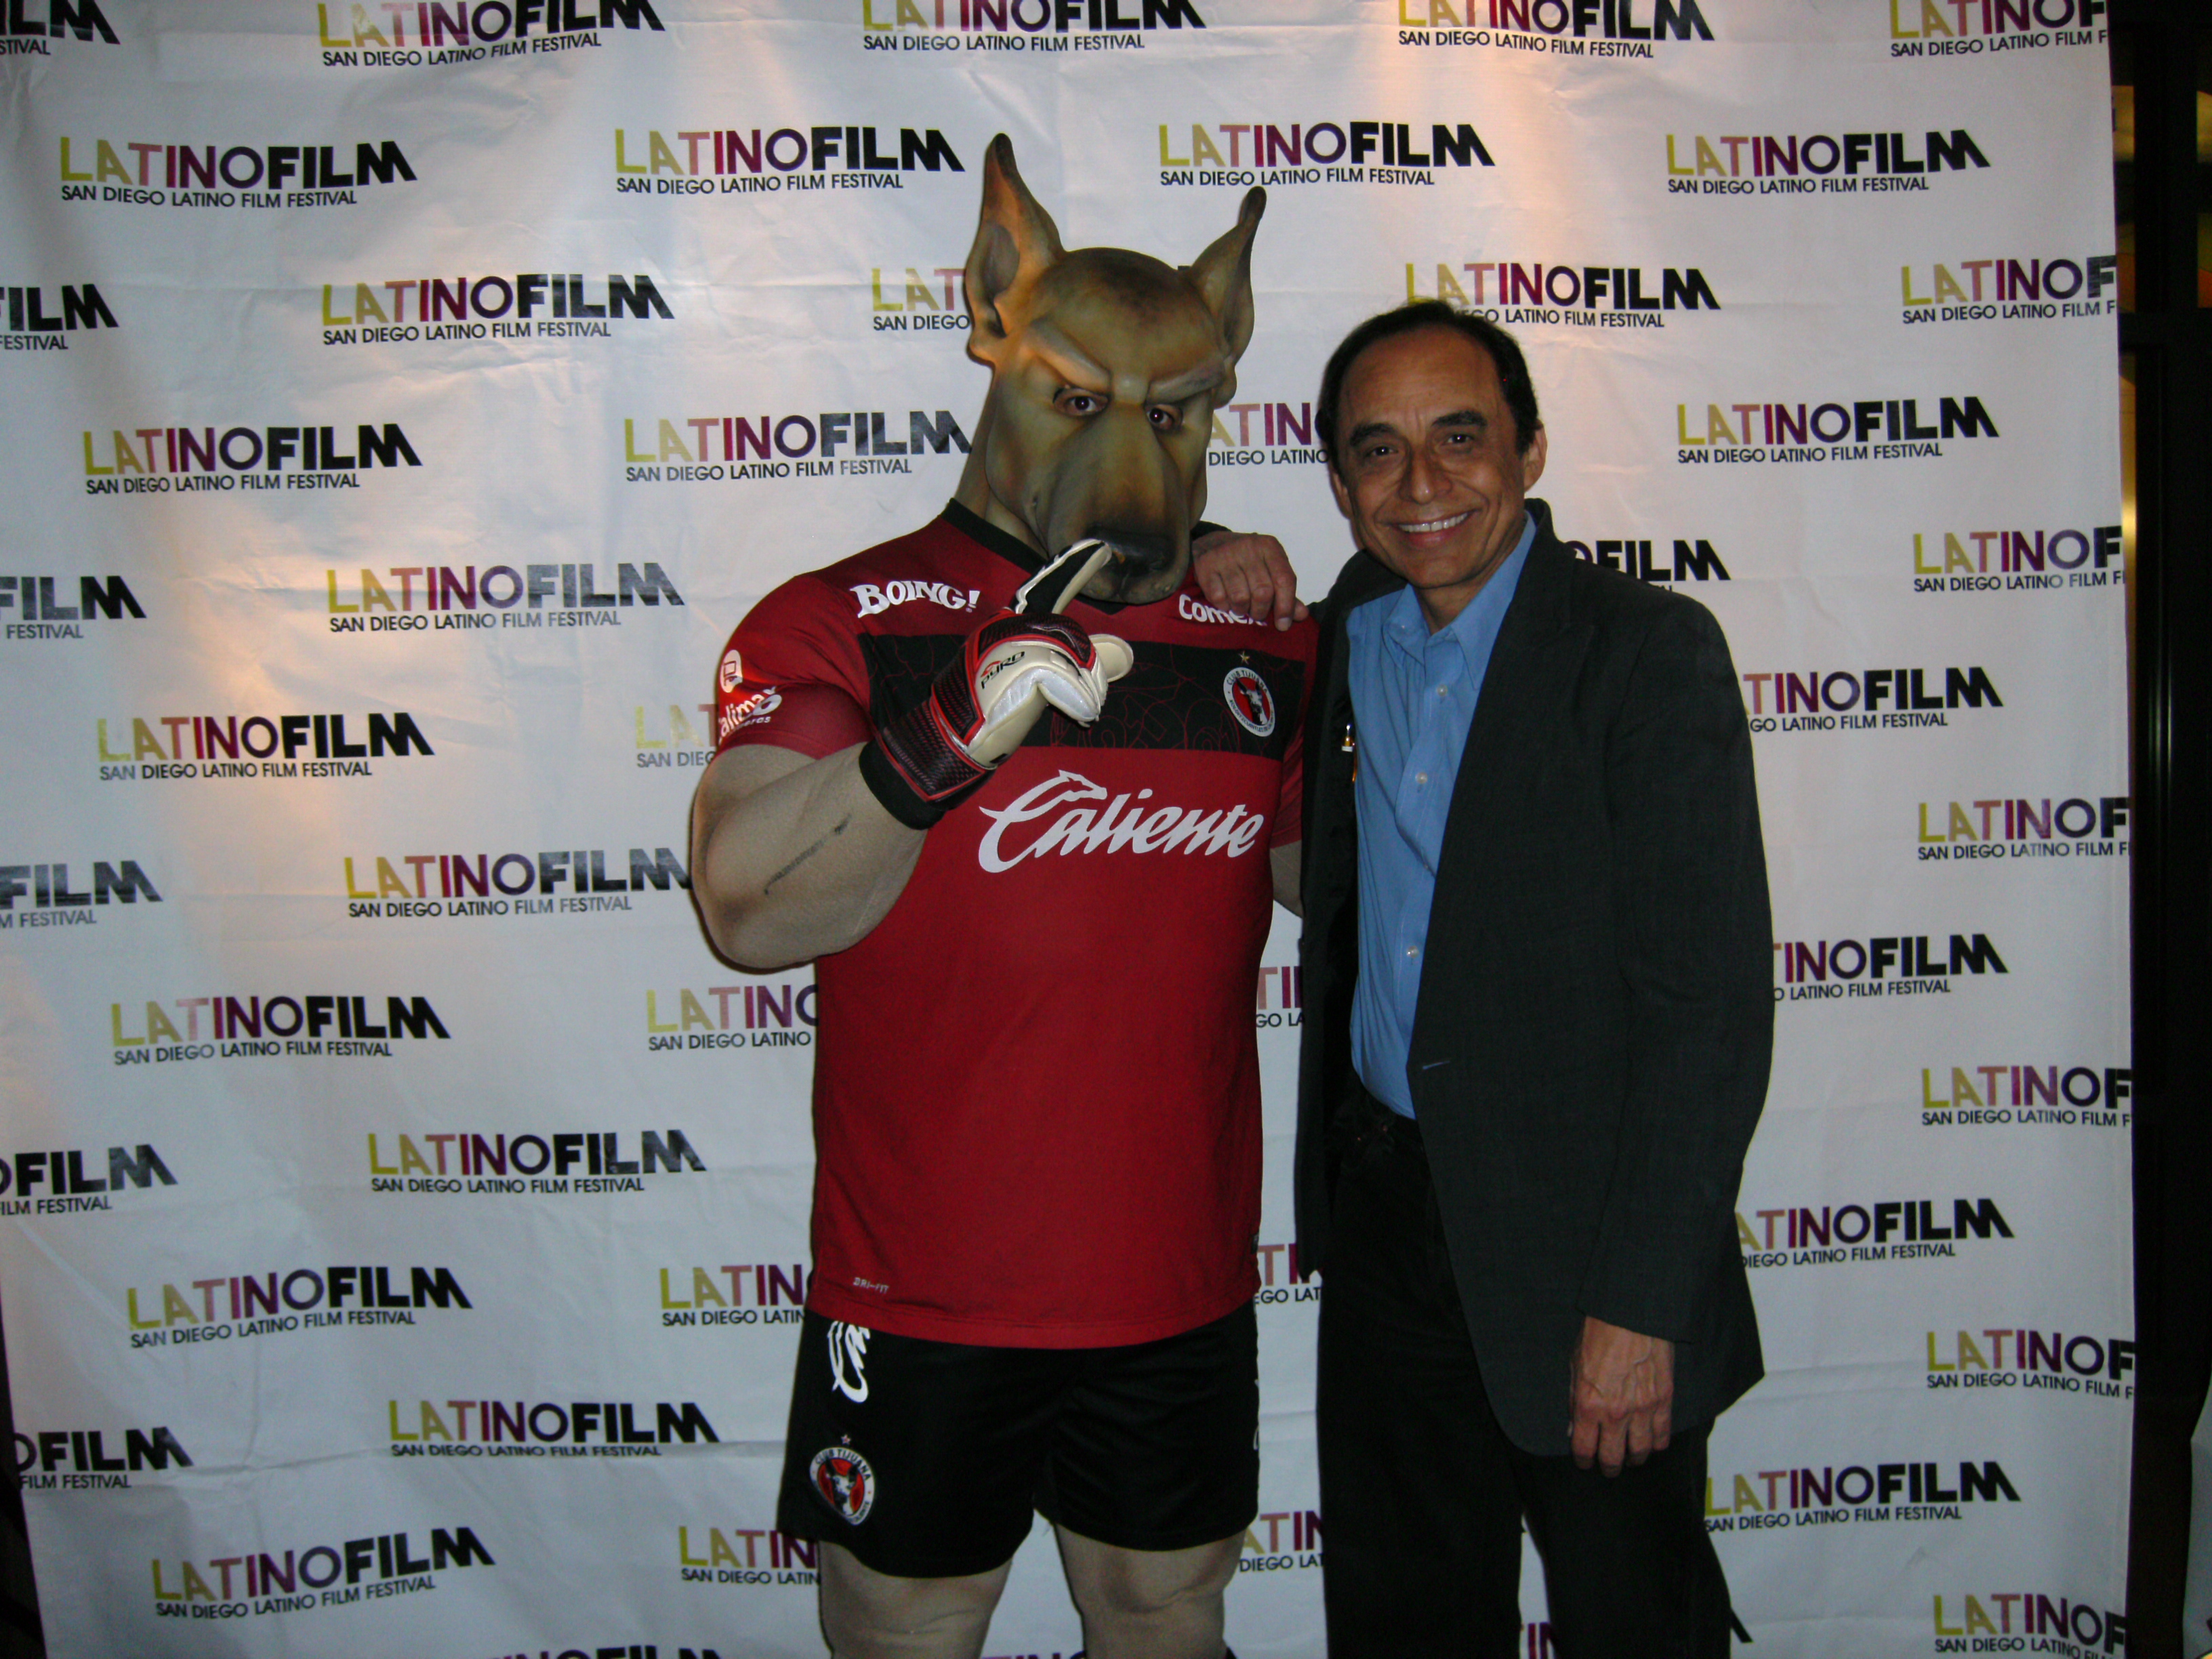 San Diego Latino Film Festival 2014